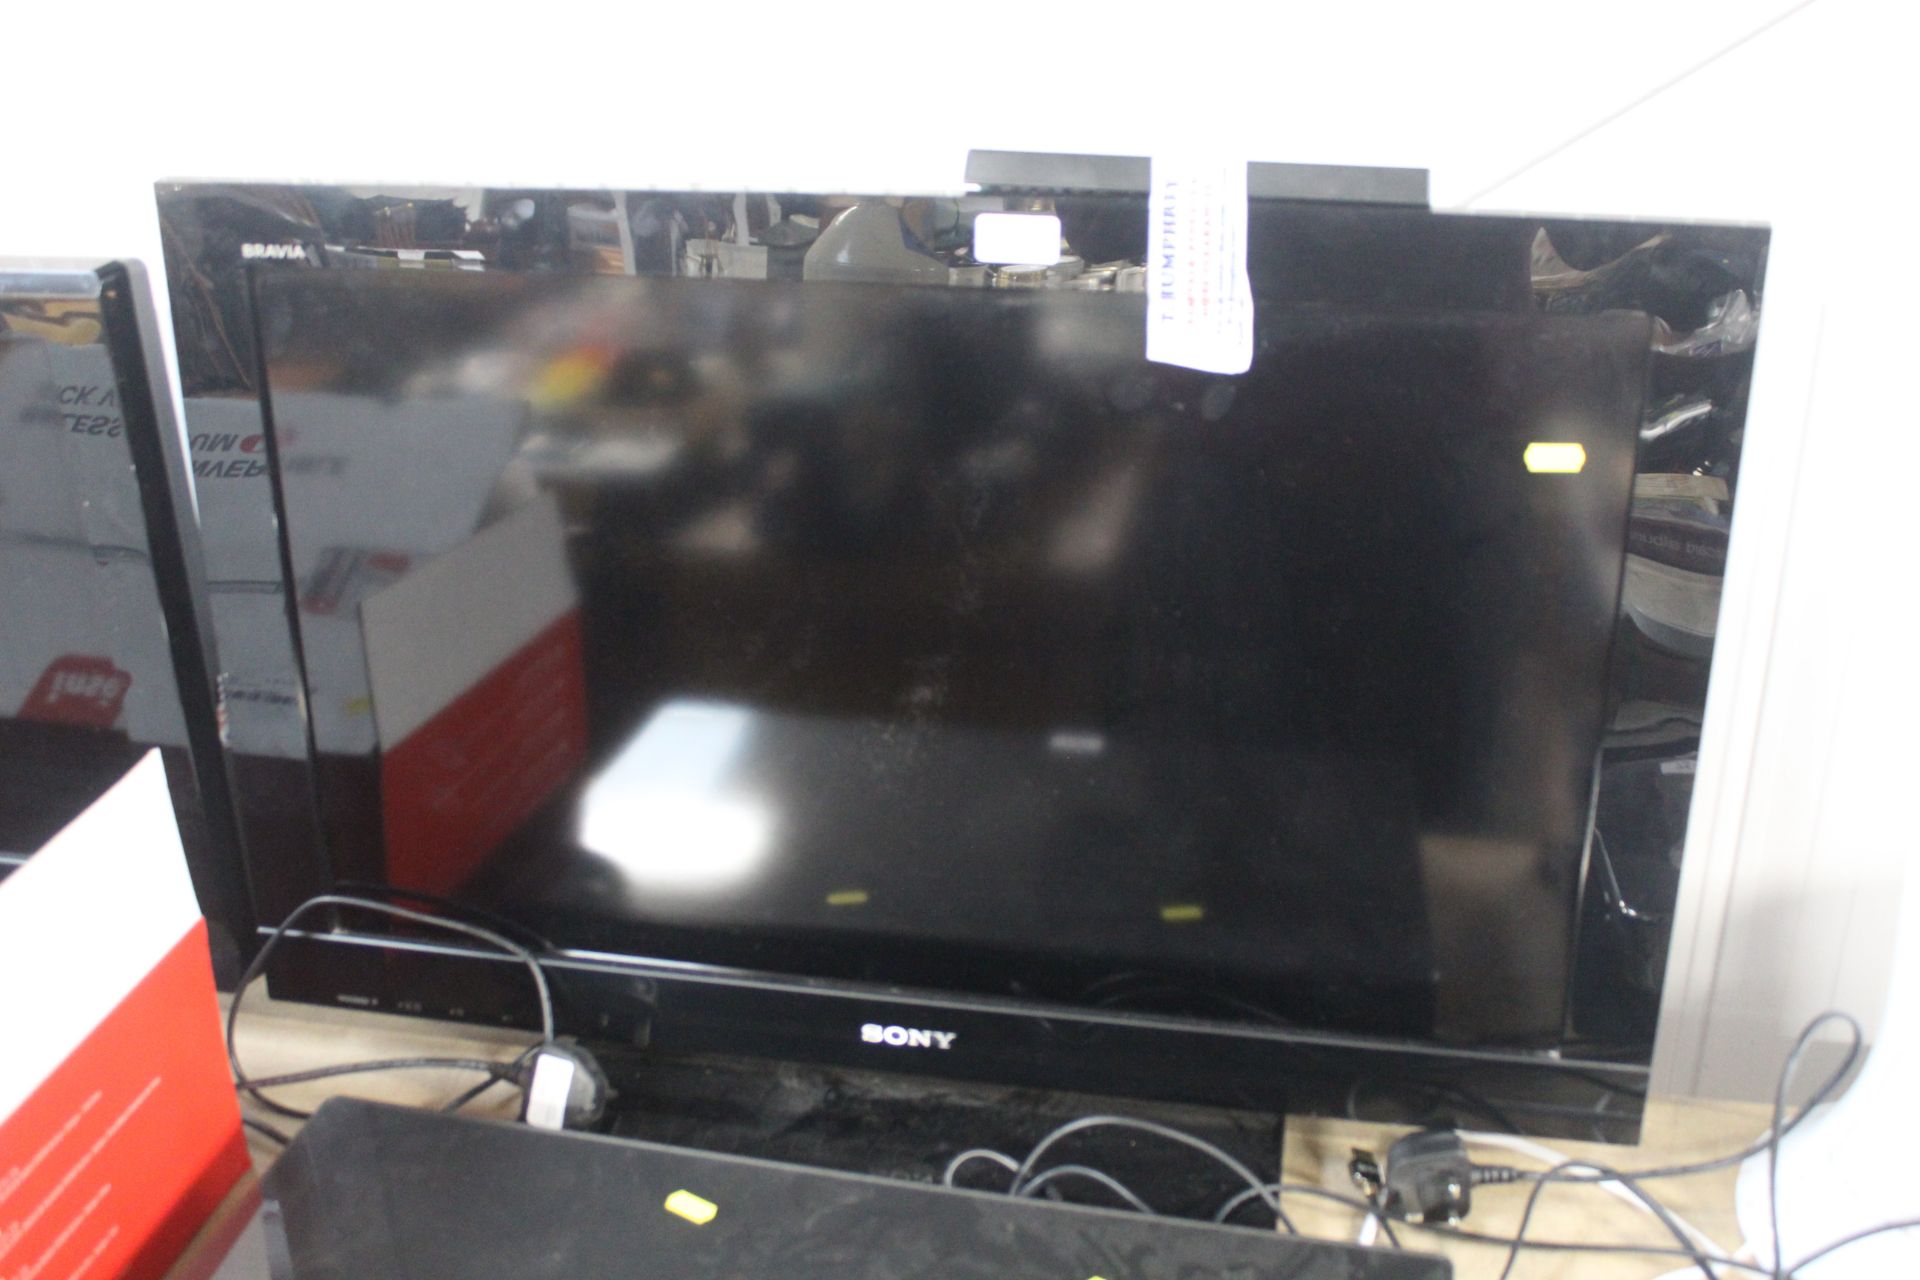 A Sony Bravia flatscreen television